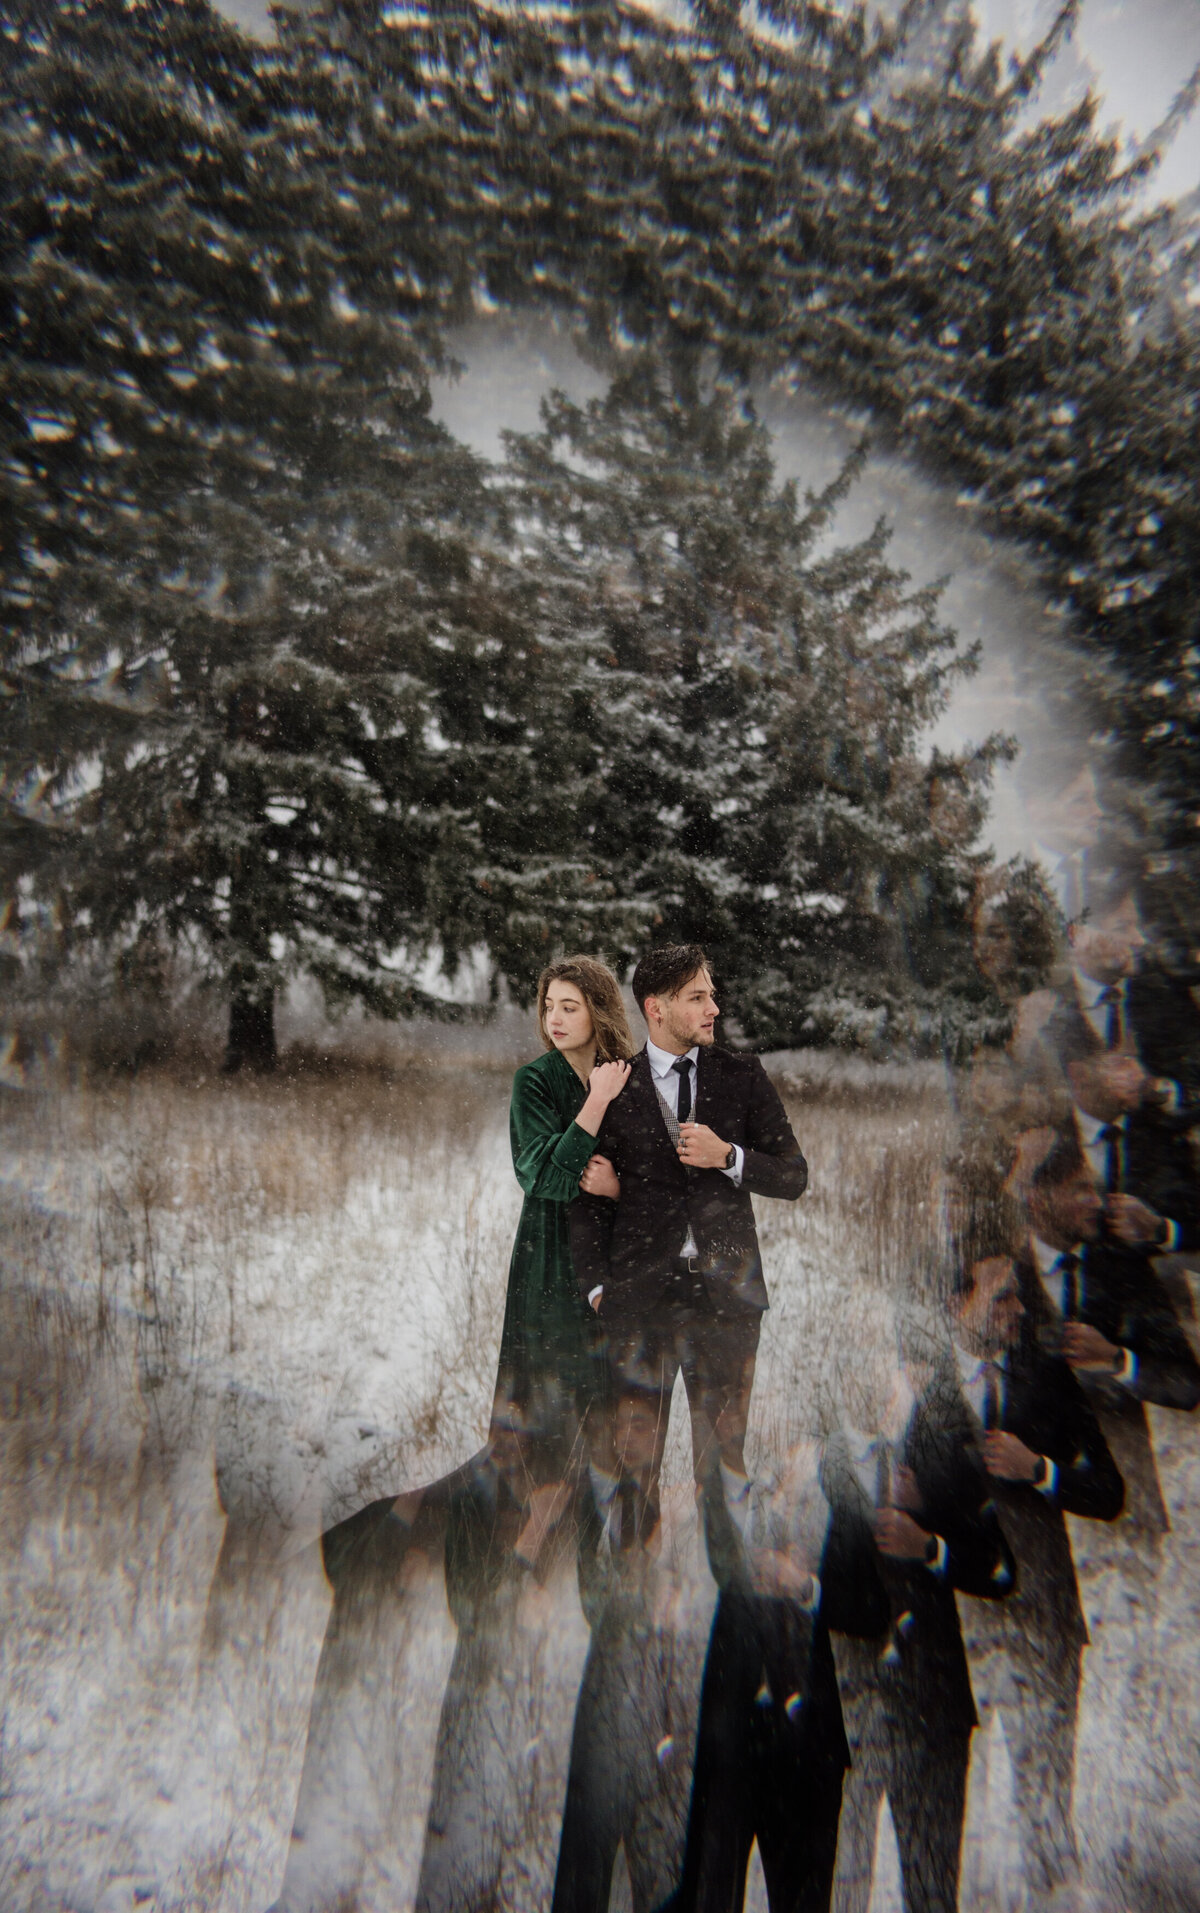 Millennium-Moments-Chicago-Wedding-Photographer-Snow-Engagement-Session-Waterfall-Glen-Flutter-Dress-Green-Velvet-Dress-Winter-Chicago-Engagement-103